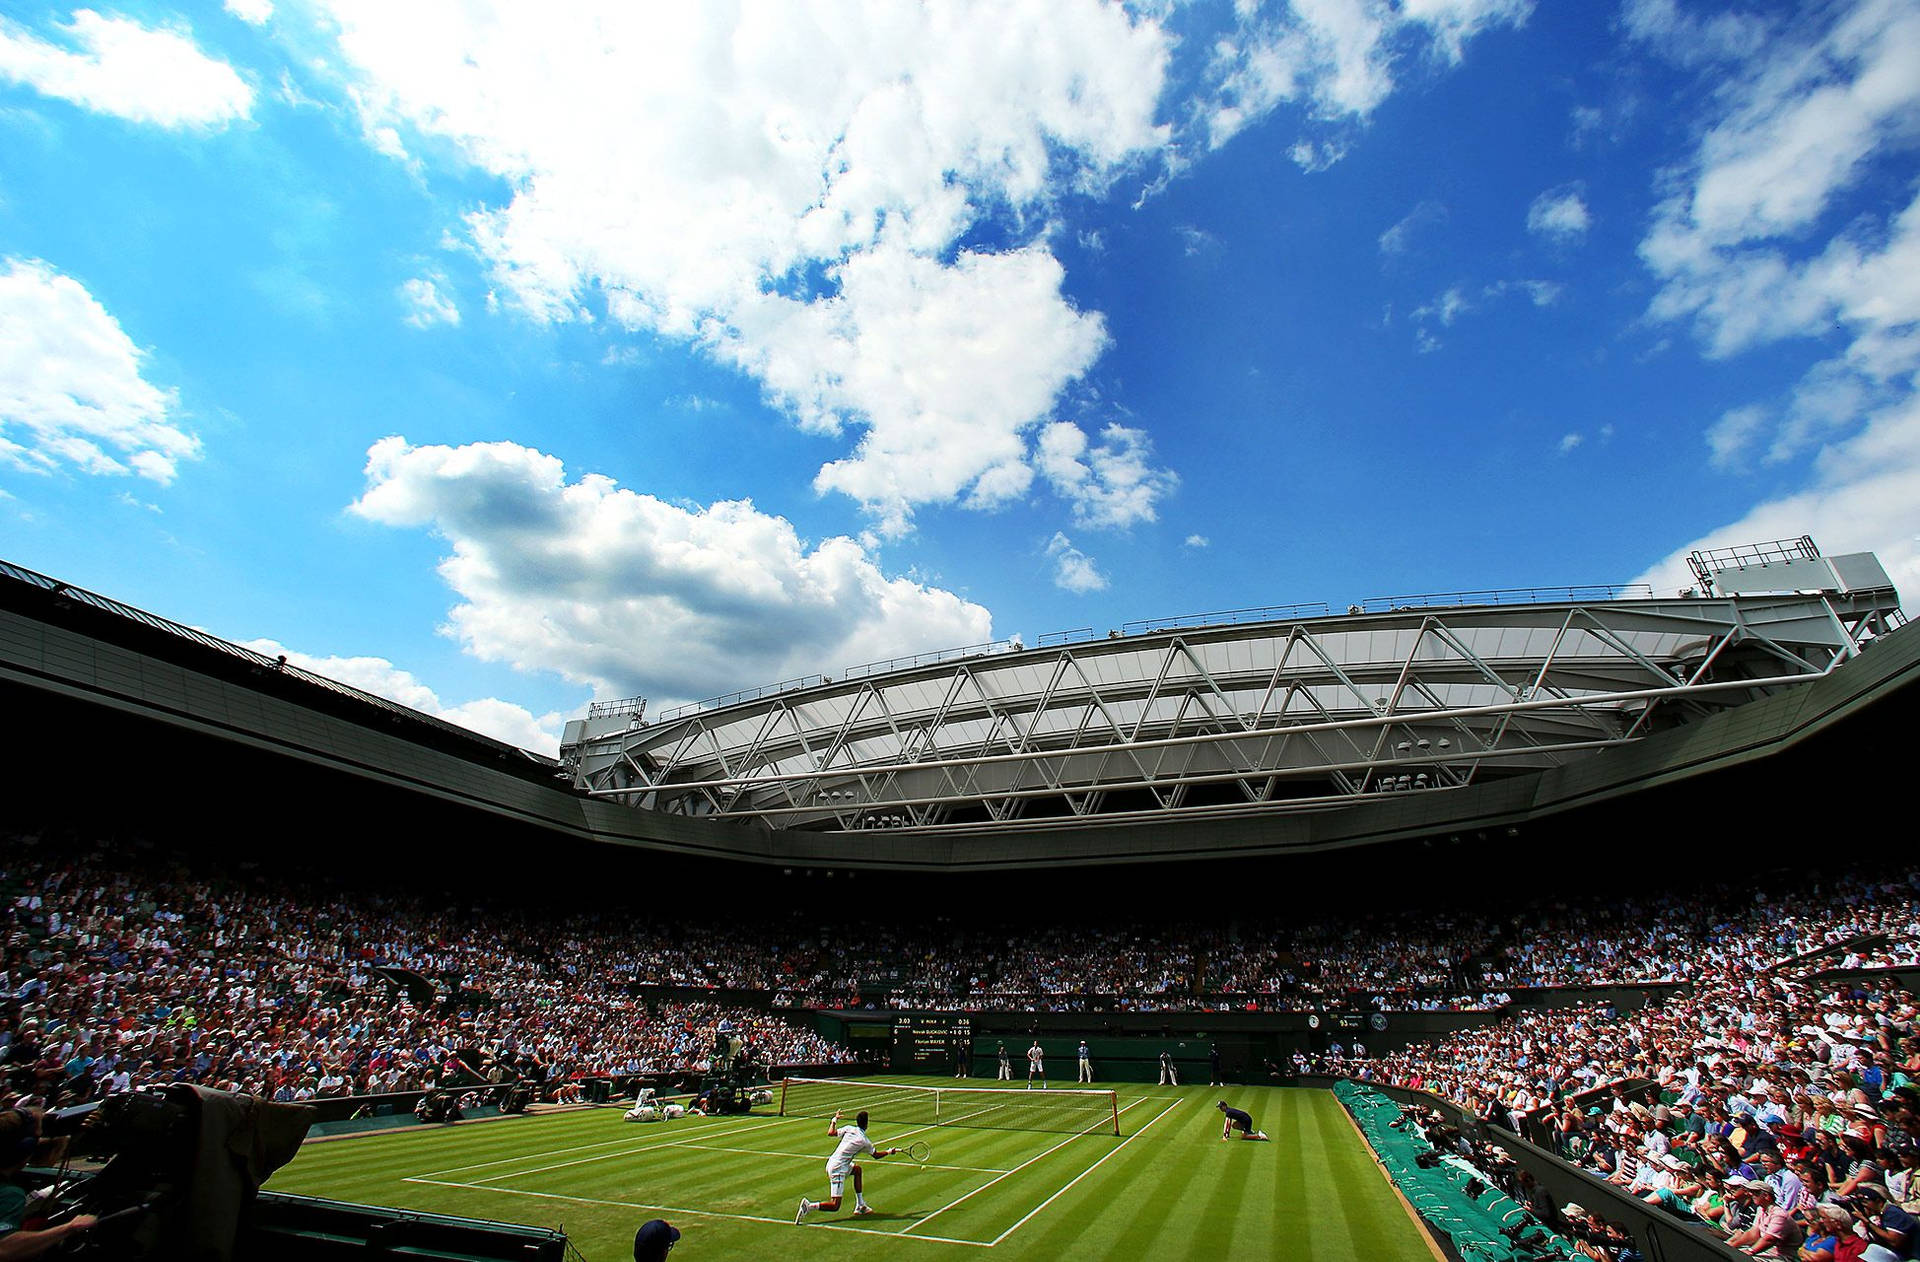 Spectacular Wimbledon Open Roof Stadium In Full Swing.